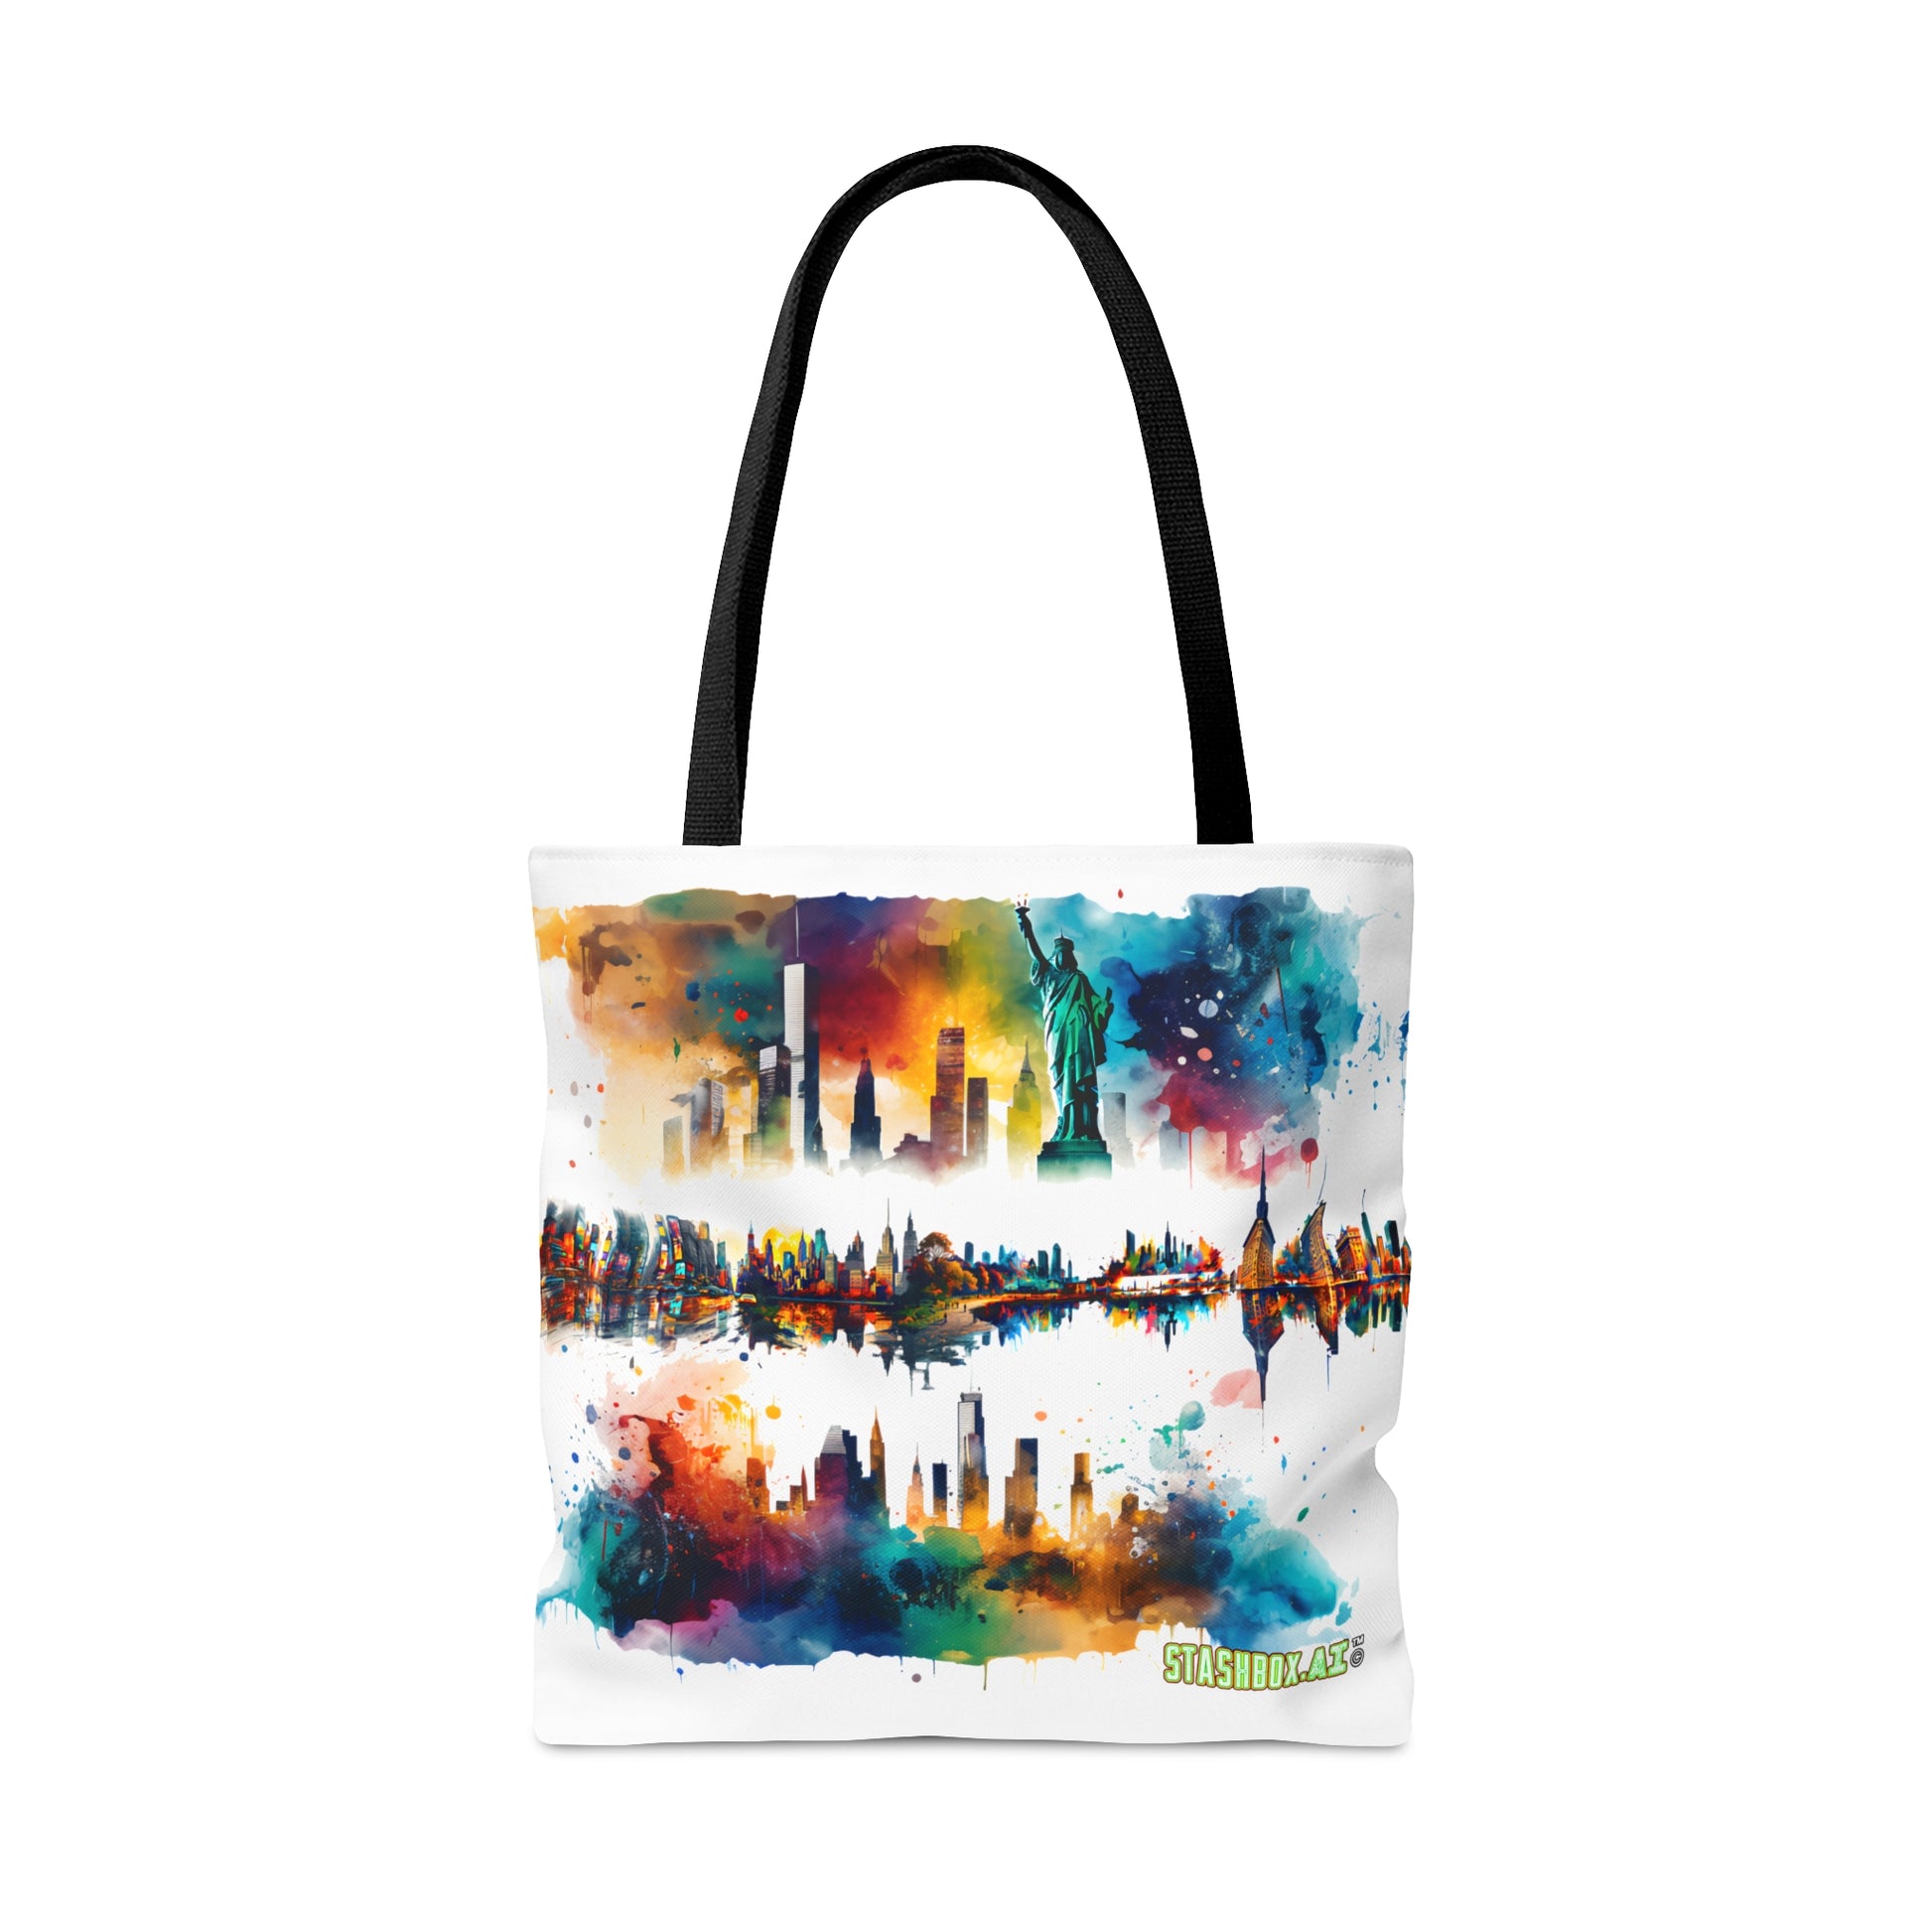 NYC Skyline Watercolor Tote - Stashbox Exclusive - #NYC #UrbanChic #CityscapeDesign #StashboxArt #FashionStatement